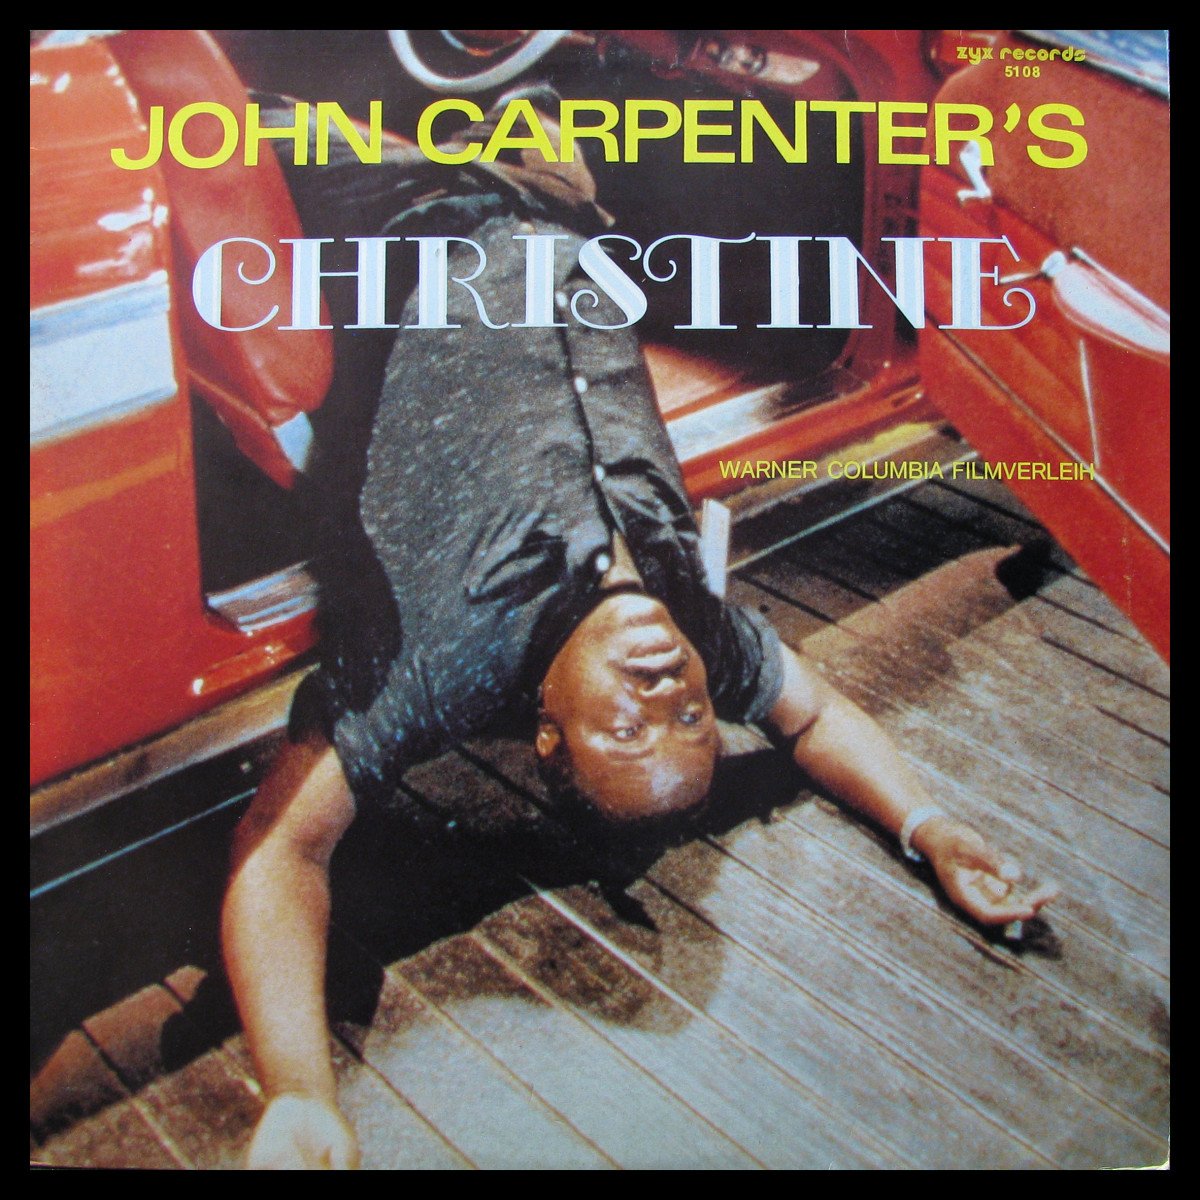 John Carpenter's Christine